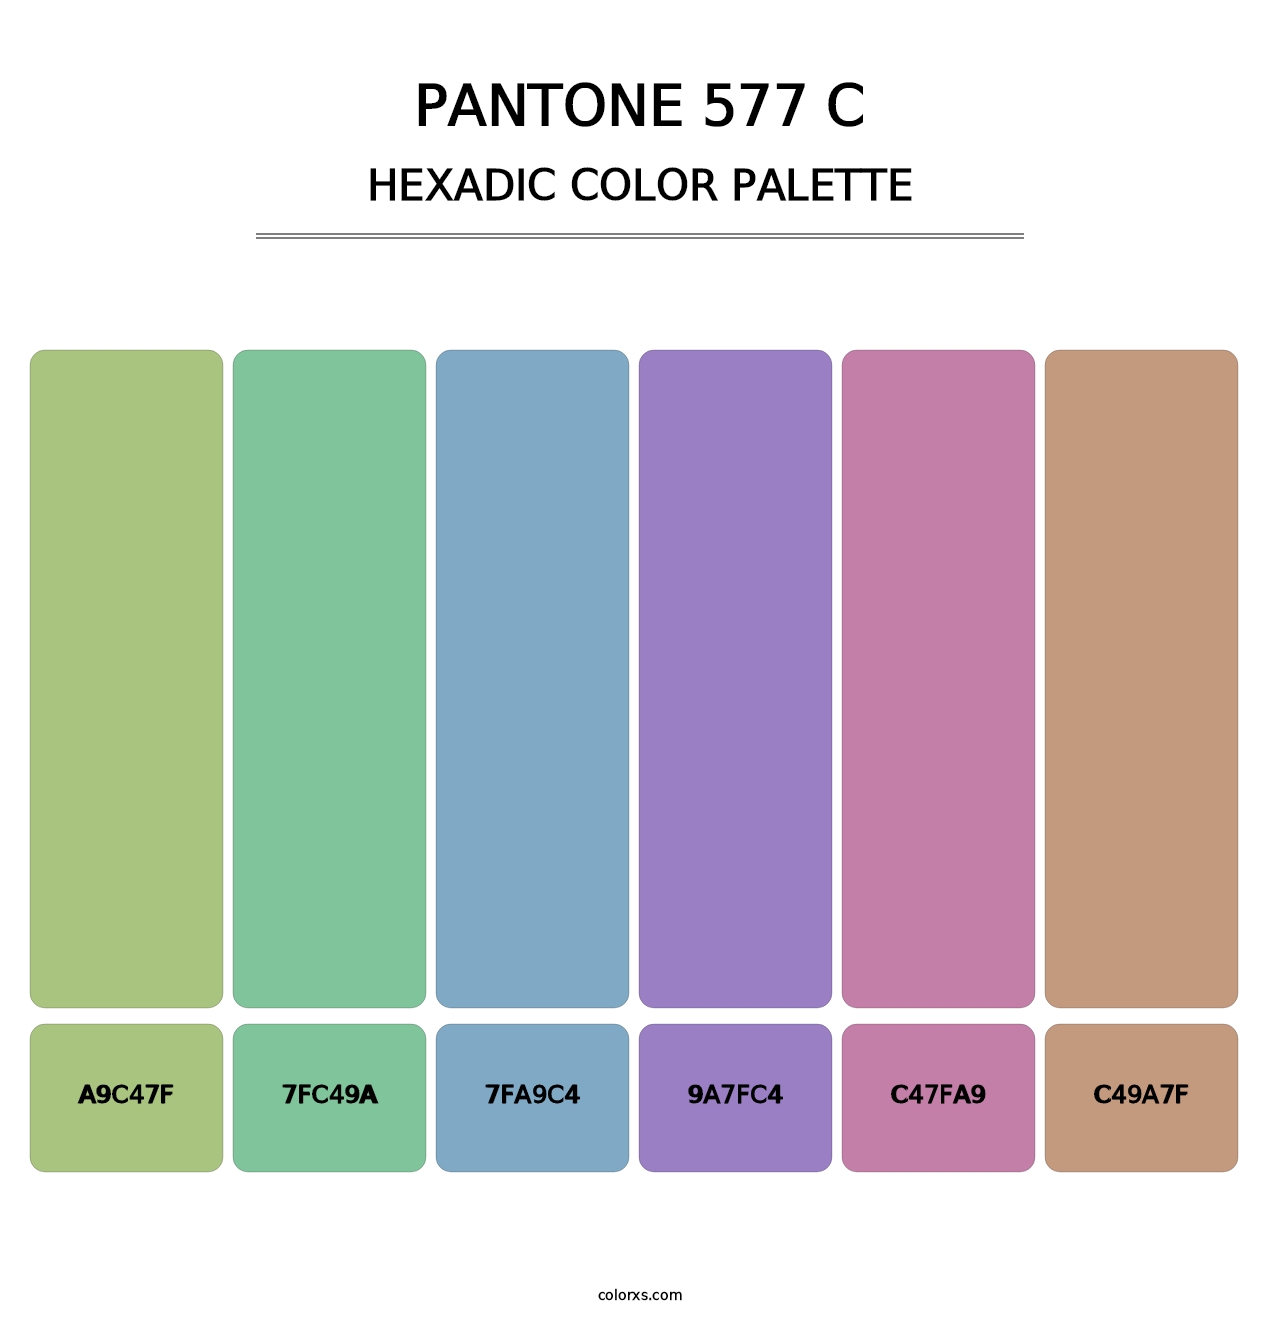 PANTONE 577 C - Hexadic Color Palette